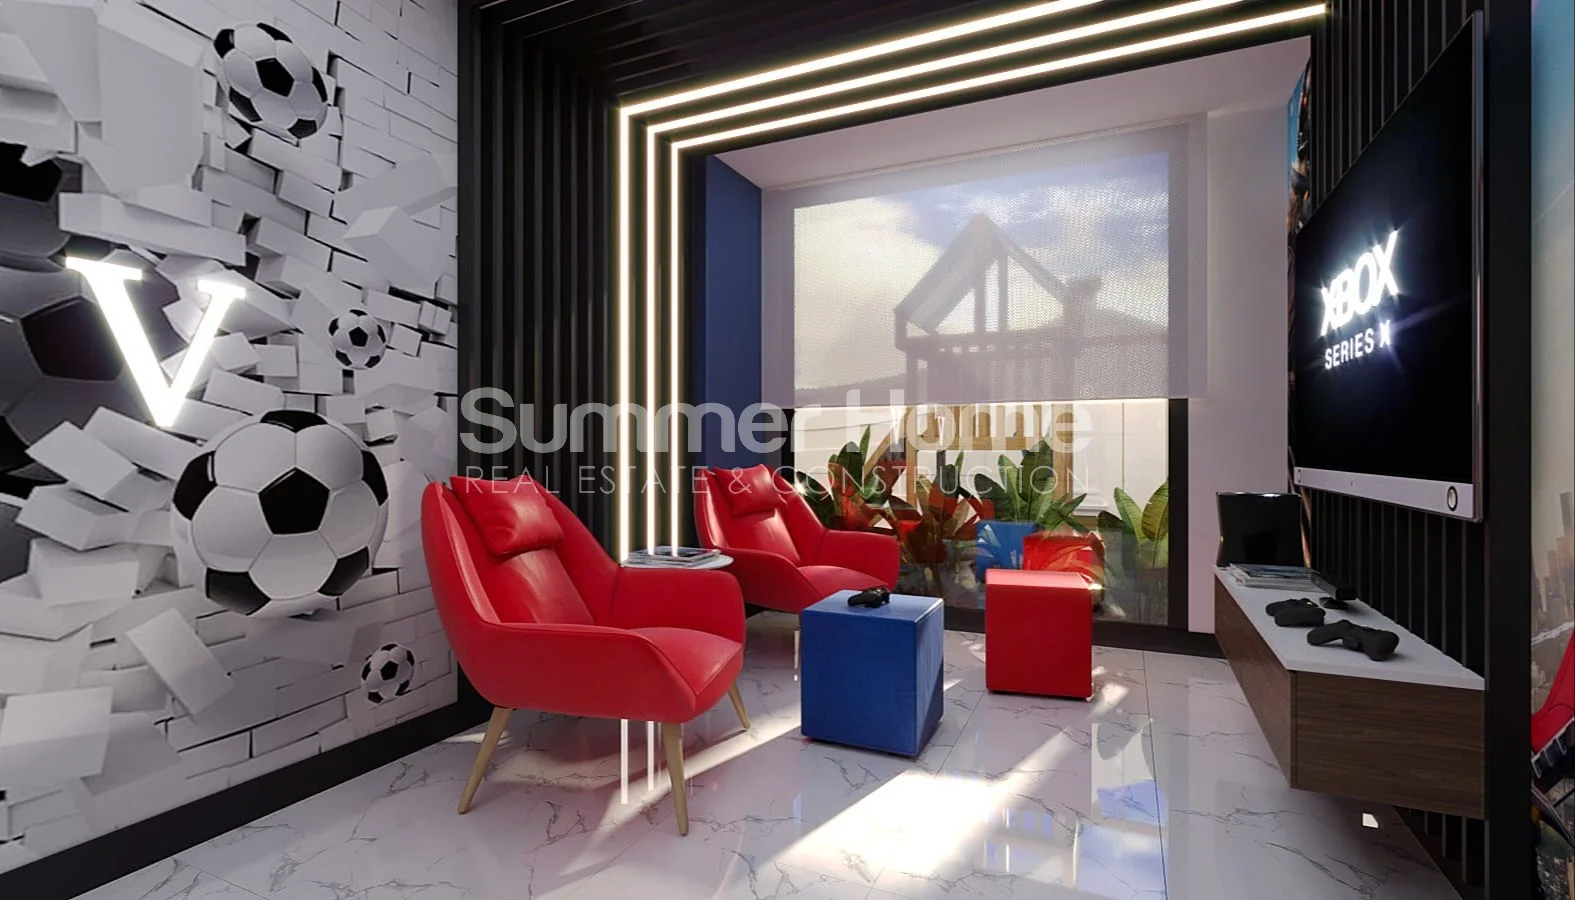 Fabulous City Apartments Available in Mahmutlar Facilities - 40